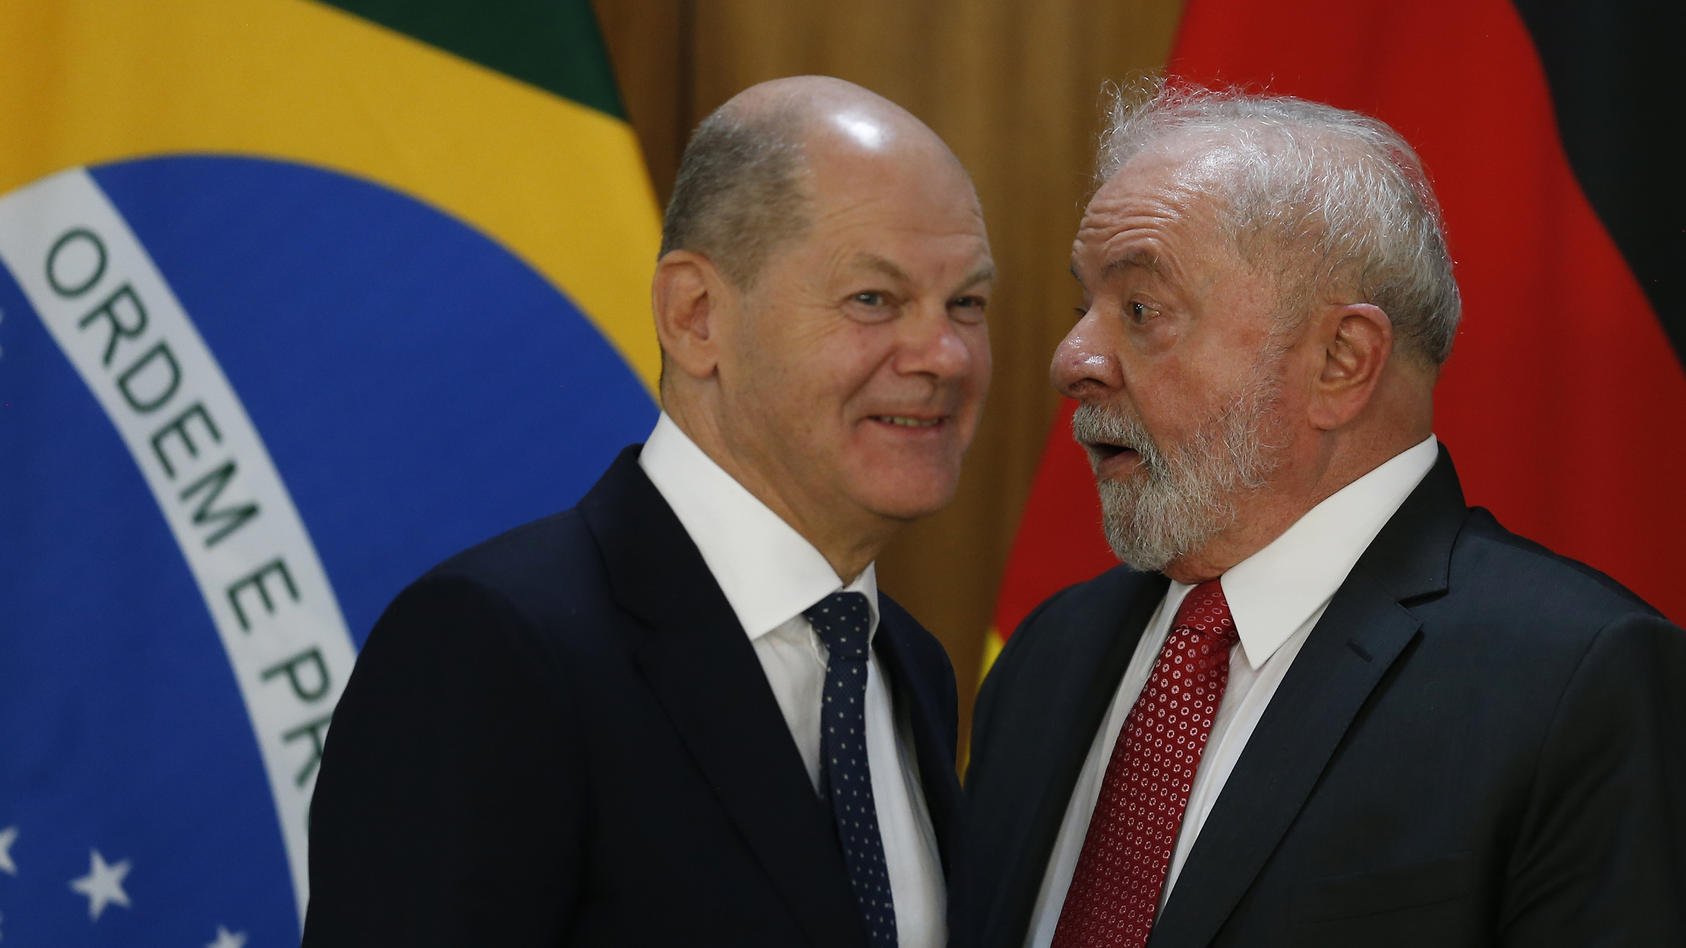 (230131) -- BRASILIA, Jan. 31, 2023 (action press/Xinhua) -- Brazilian President Luiz Inacio Lula da Silva (R) and German Chancellor Olaf Scholz attend a press conference in Brasilia, Brazil, Jan. 30, 2023. (Photo by Lucio Tavora/action press/Xinhua)